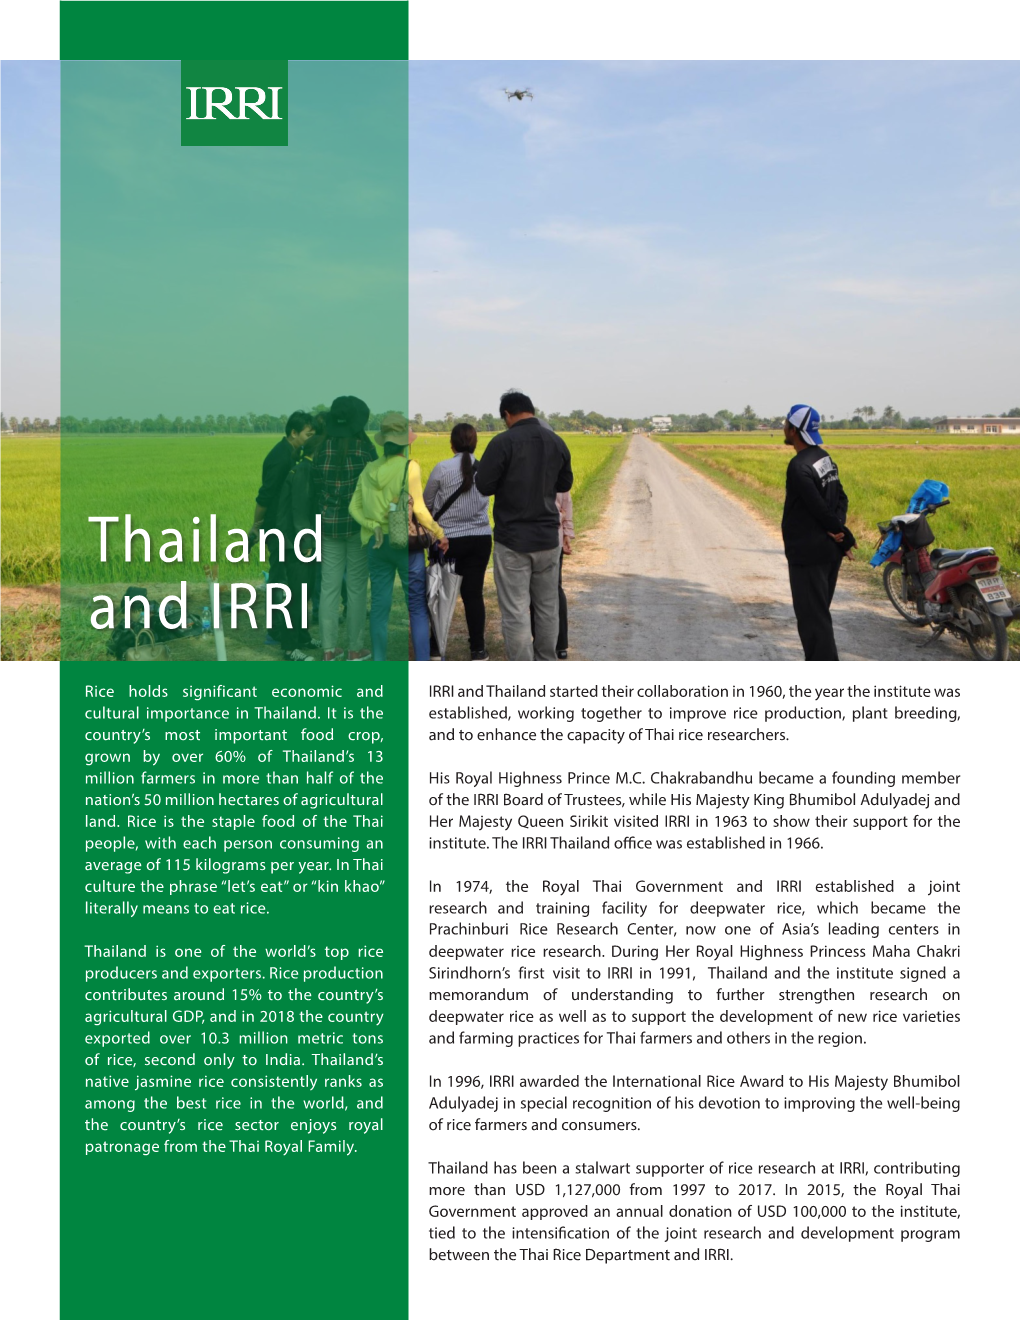 Thailand and IRRI